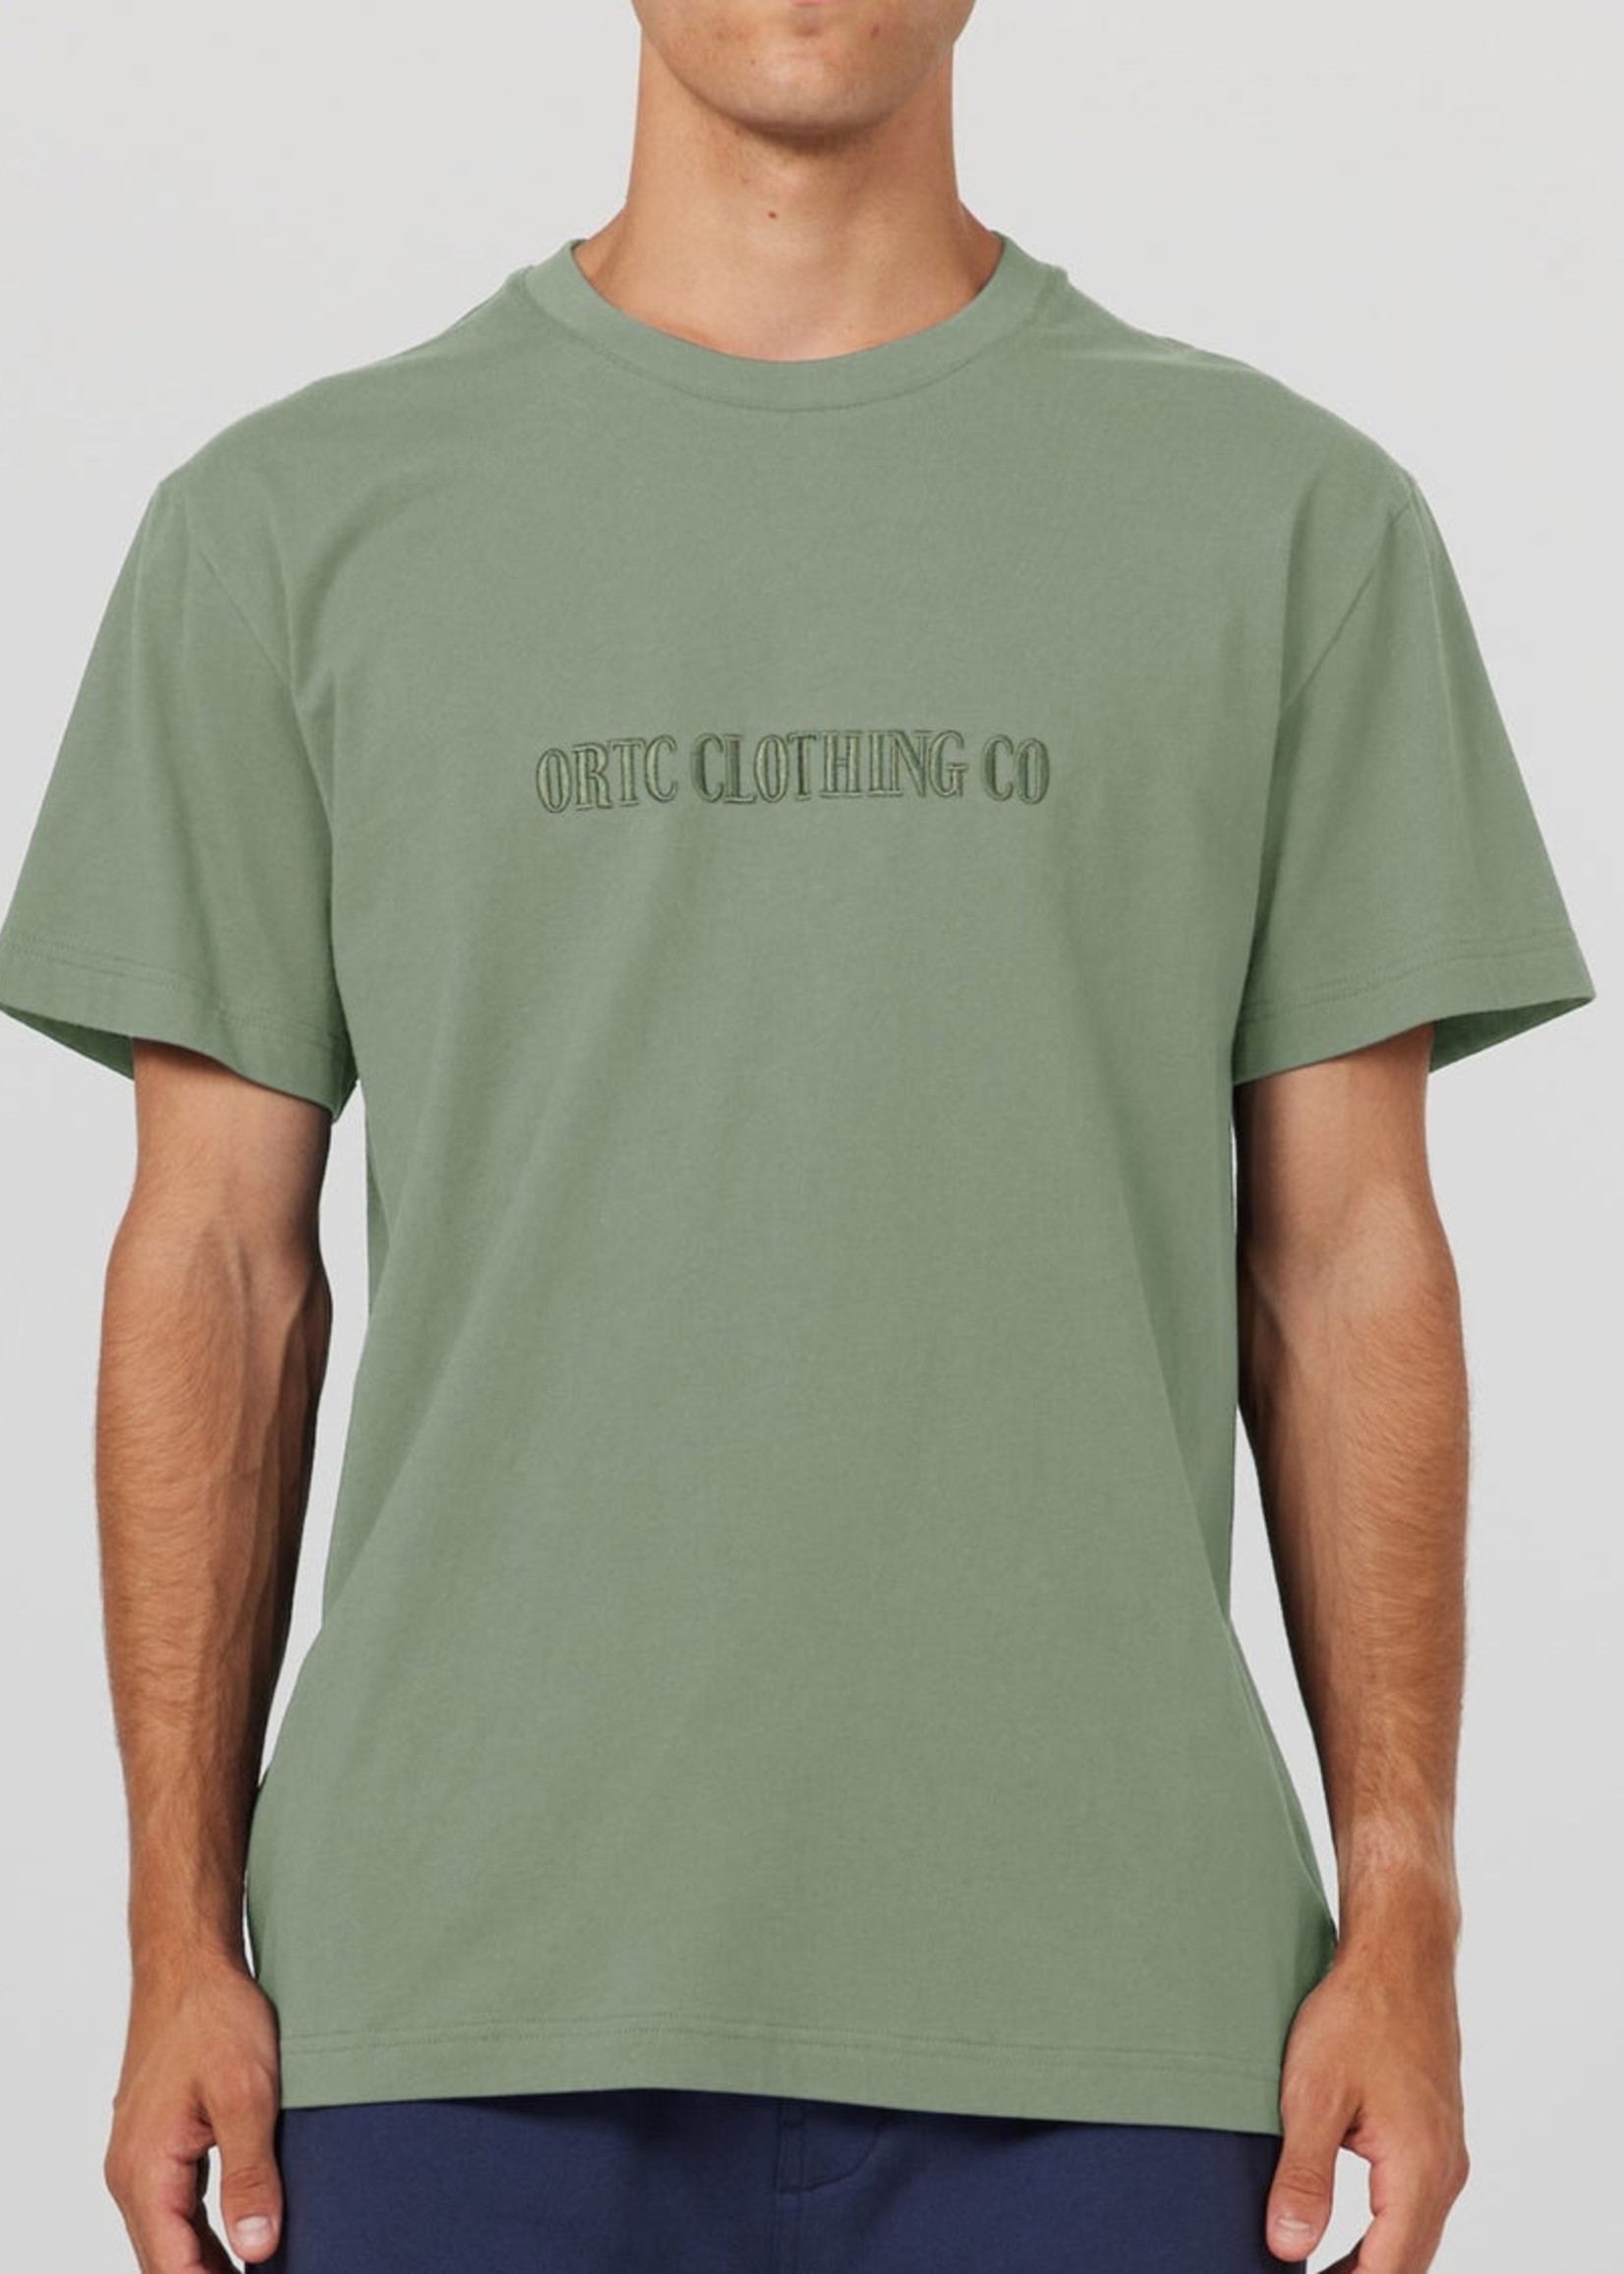 ORTC Classic Logo T Shirt (Olive)